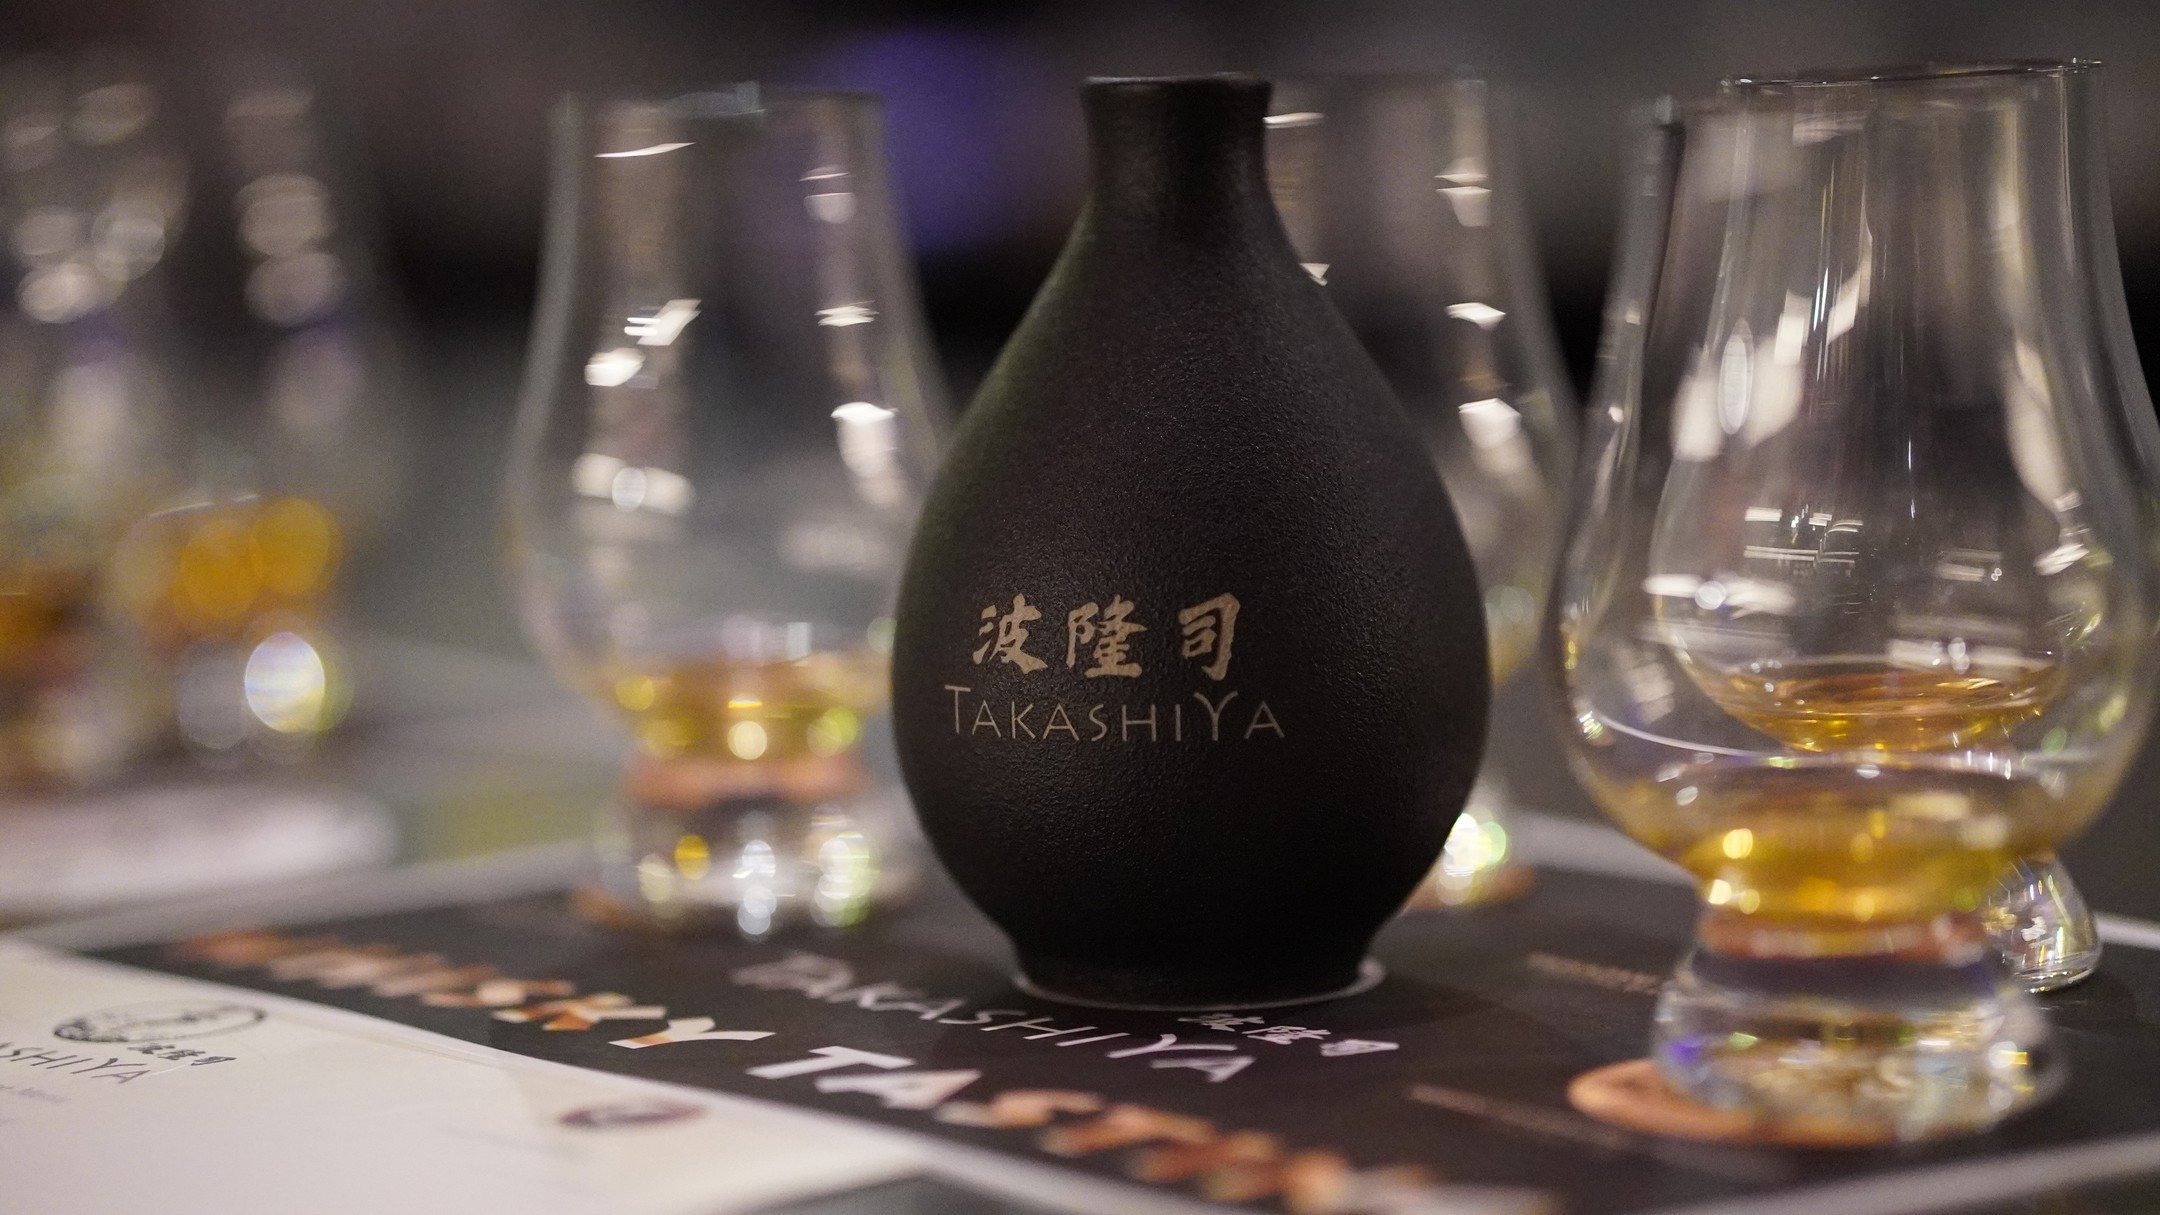 🥃On April 18th, the Takashiya Whisky Tasting Night unveiled a captivating lineup of Japanese whiskies &ndash; from the refreshing Toki highball to the rich flavours of Chita, Hakushu, Yamazaki, Hibiki, Hakushu 12yr, and Yamazaki 18yr. 

As VIPs arri